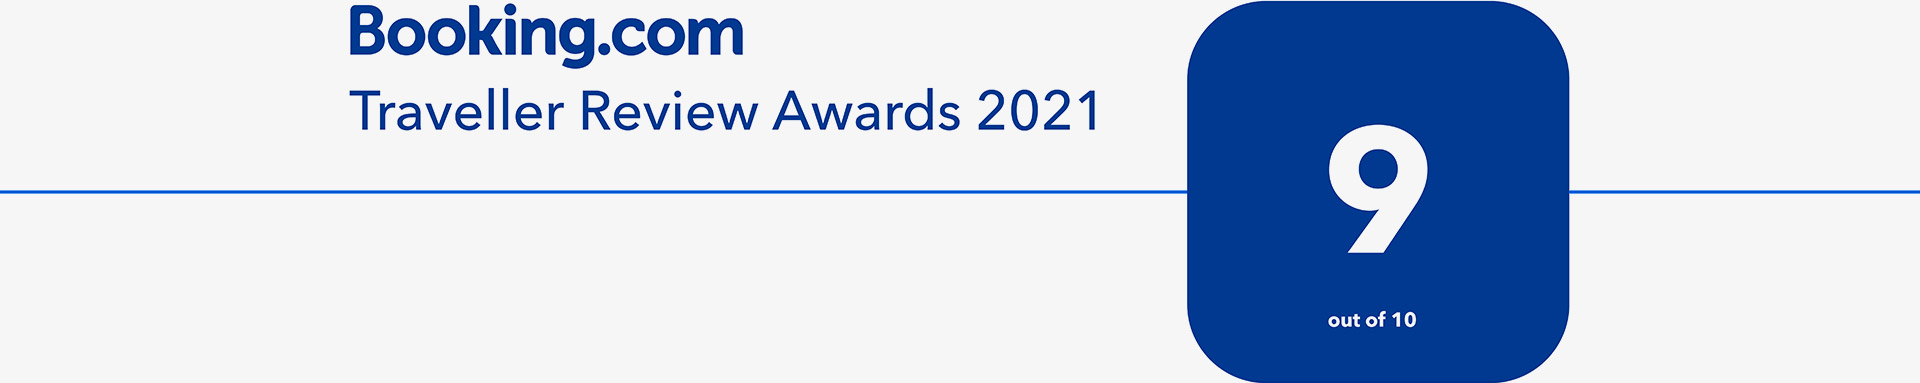 Traveller Review Award 2021 mit 9,0 auf Booking.com